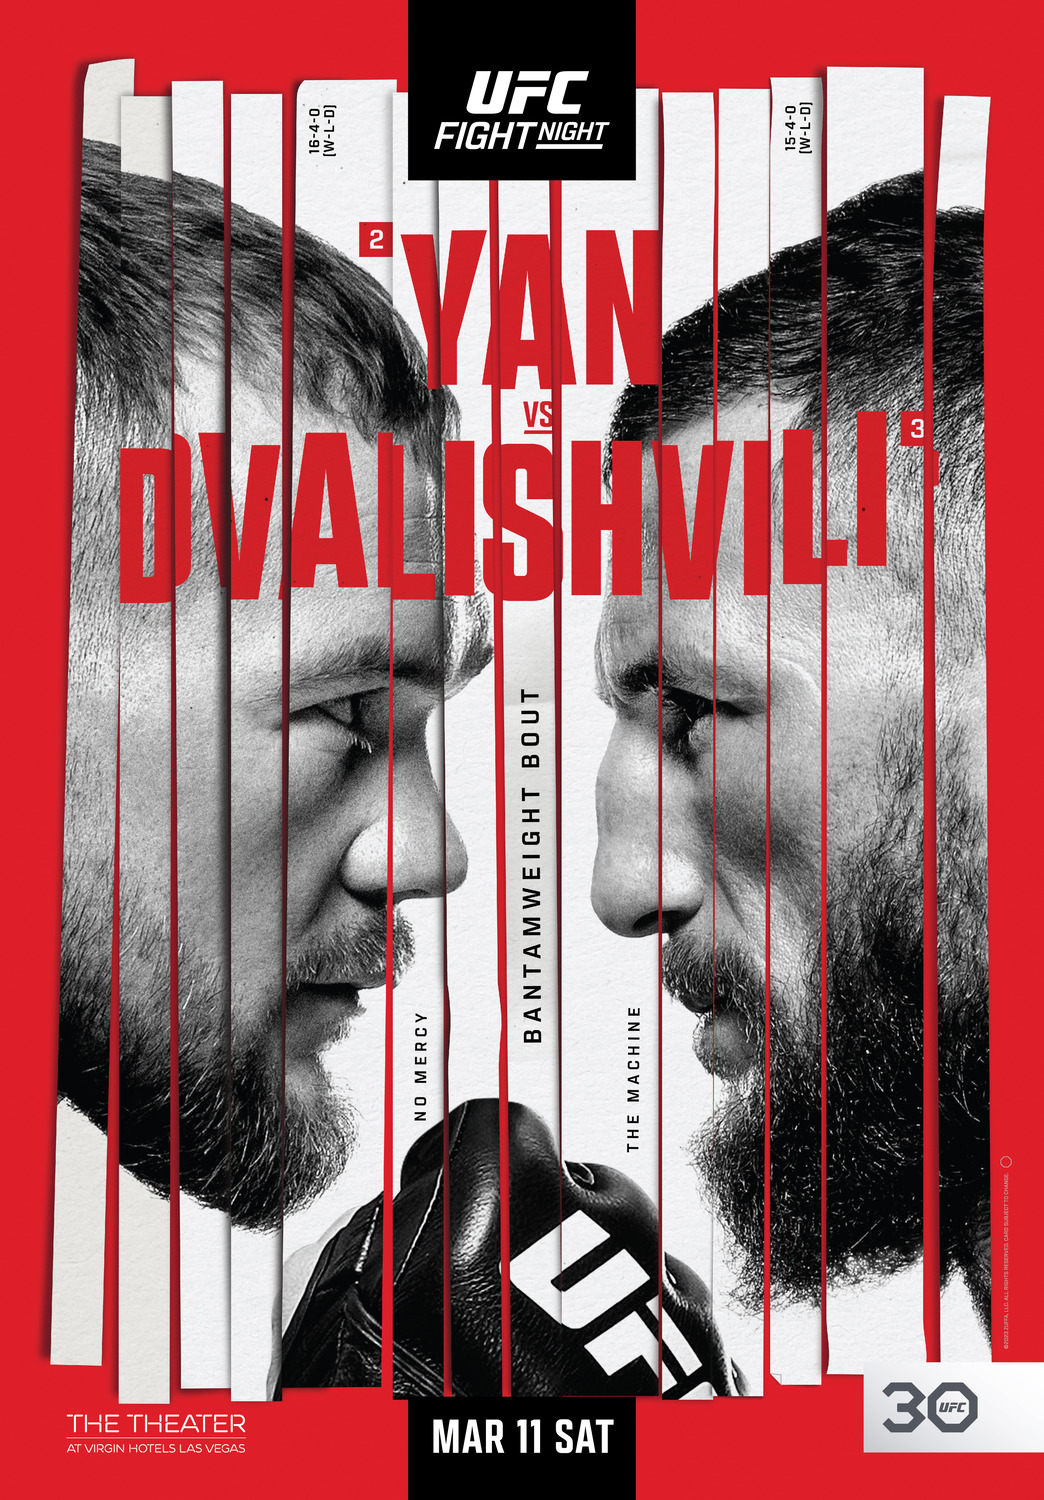 Extra Large TV Poster Image for UFC Fight Night: Yan vs Dvalishvili 